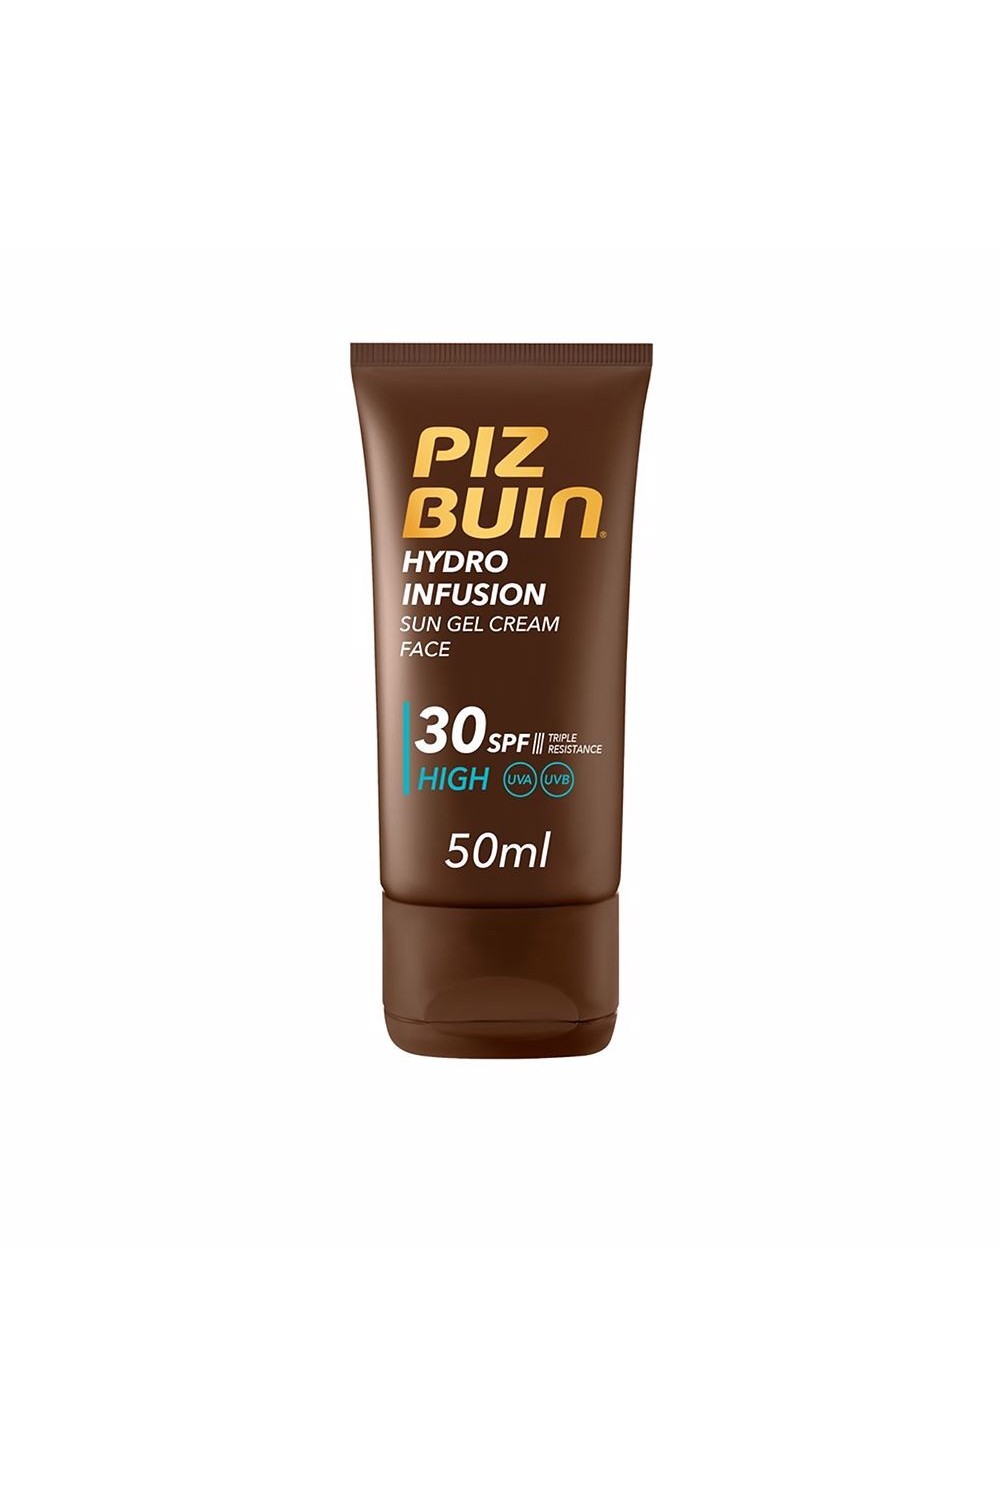 Piz Buin Hydro Infusion Sun Gel Cream Face Spf30 50ml